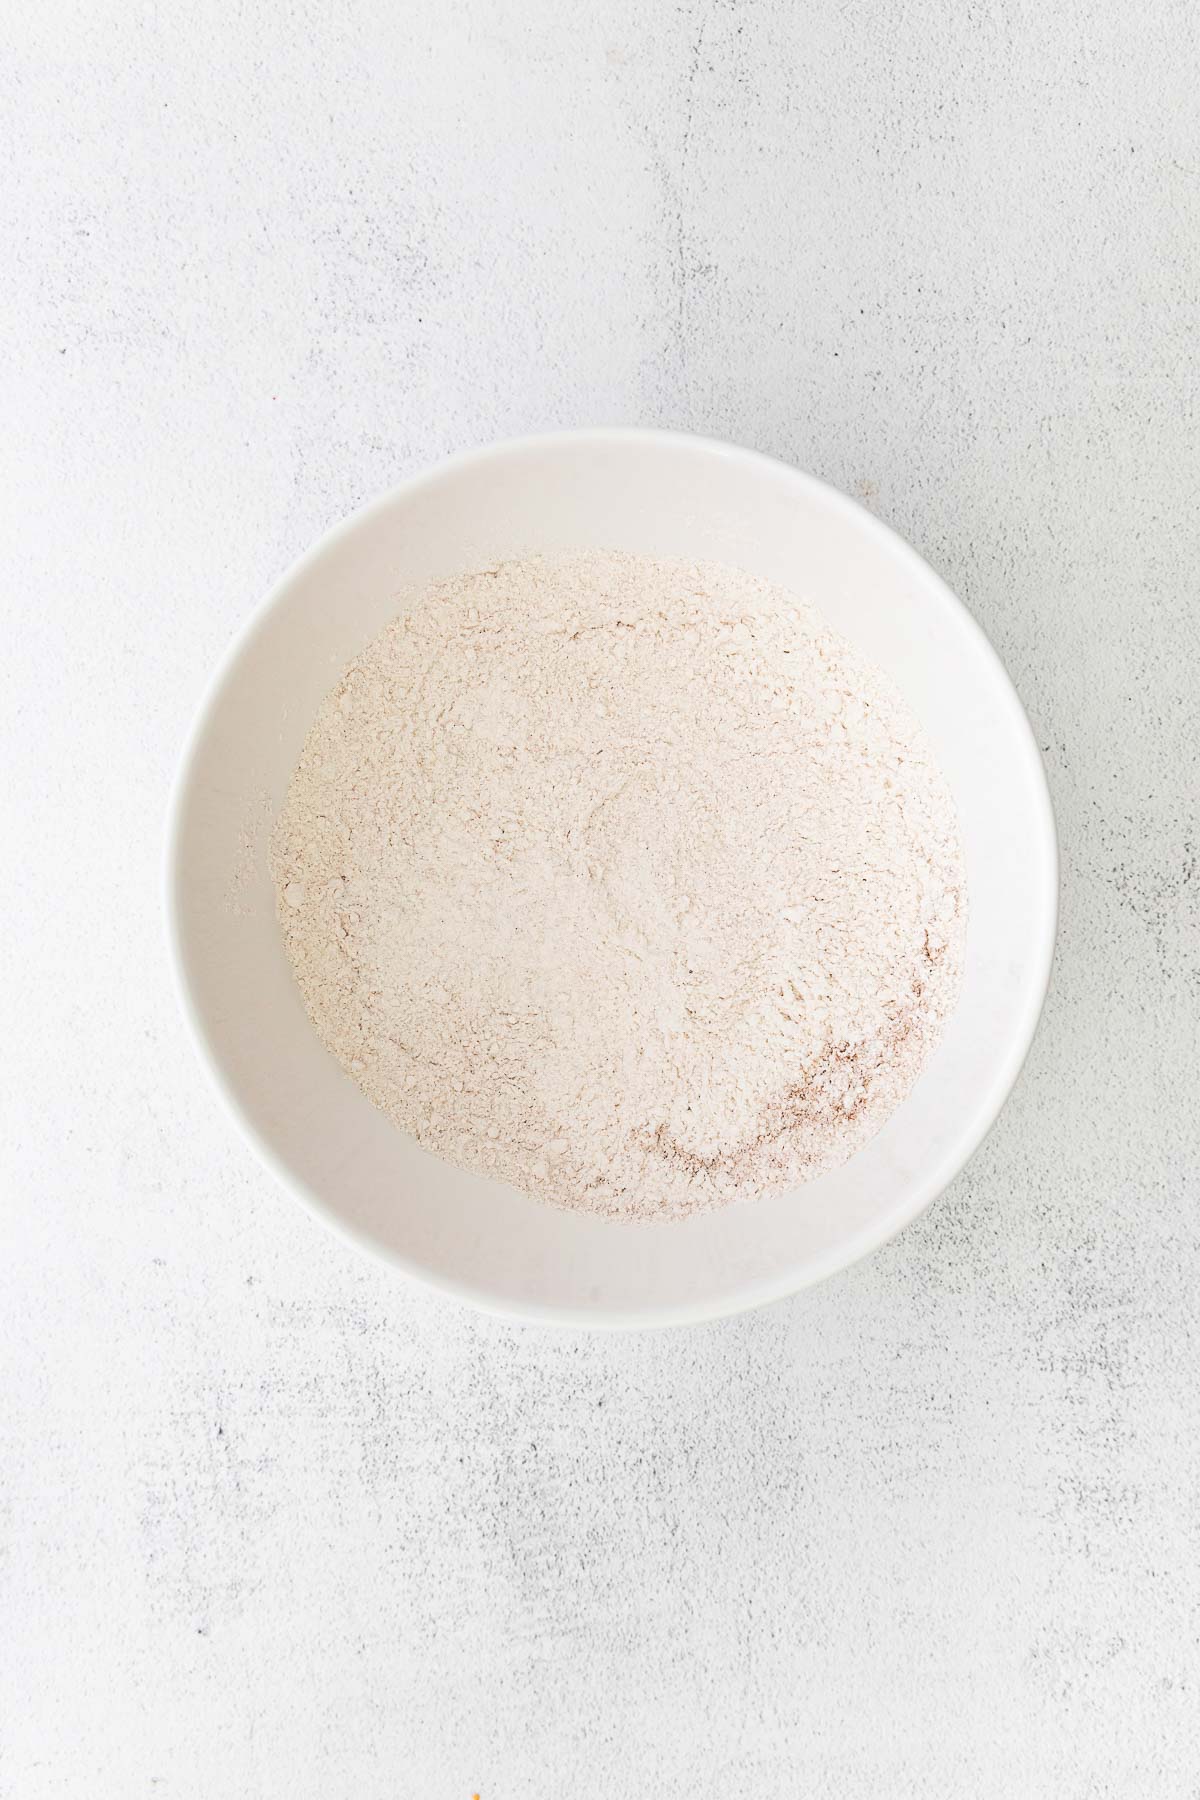 flour mixture in a white bowl